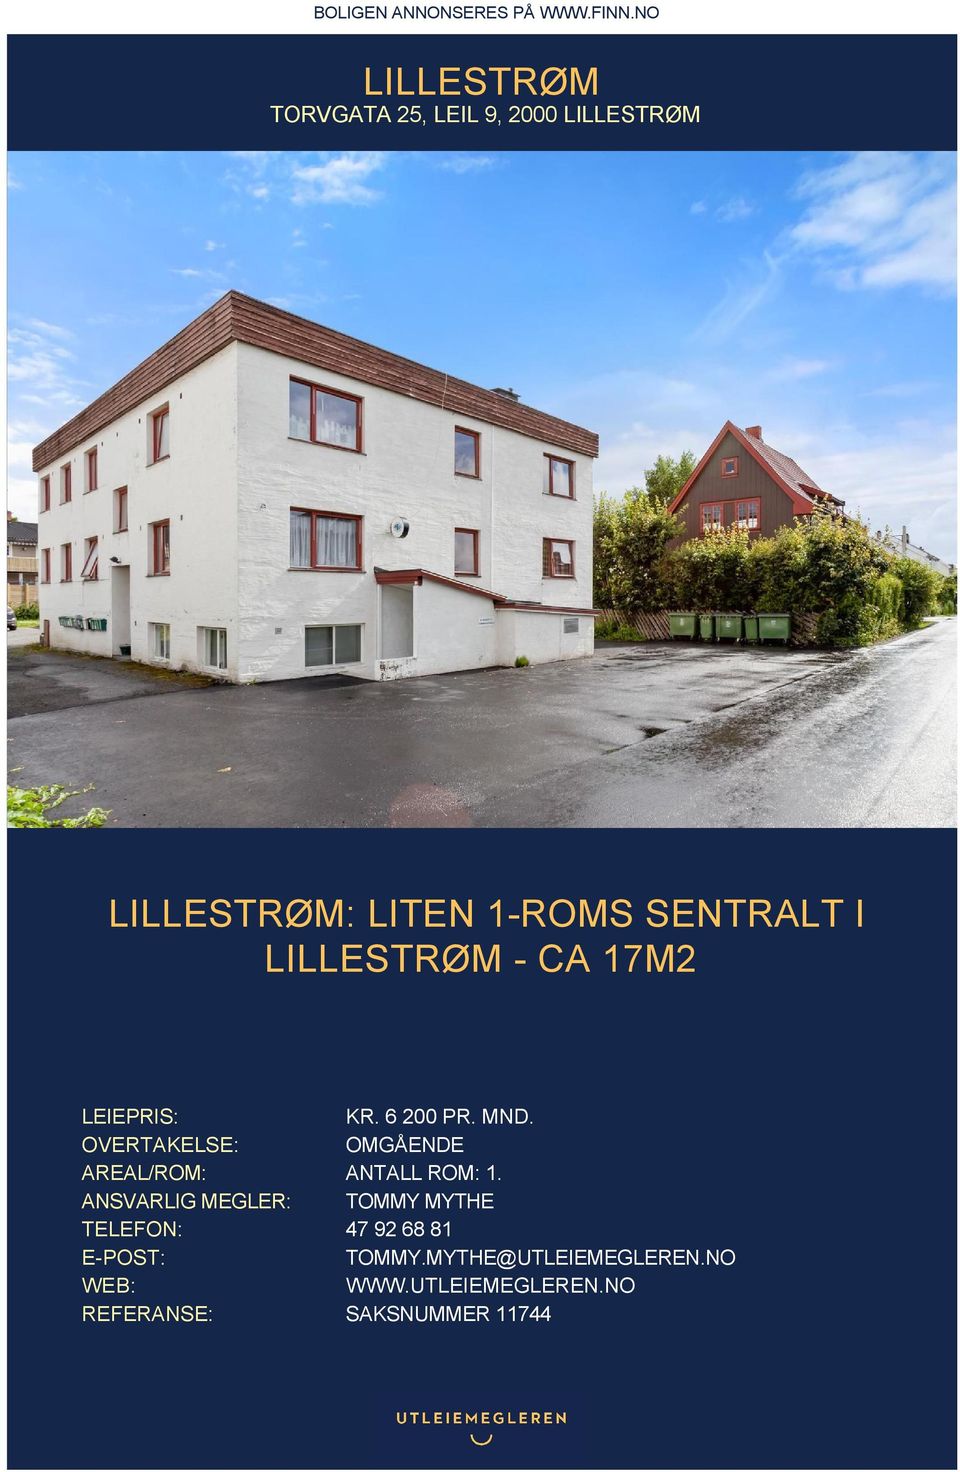 LILLESTRØM - CA 17M2 LEIEPRIS: KR. 6 200 PR. MND.